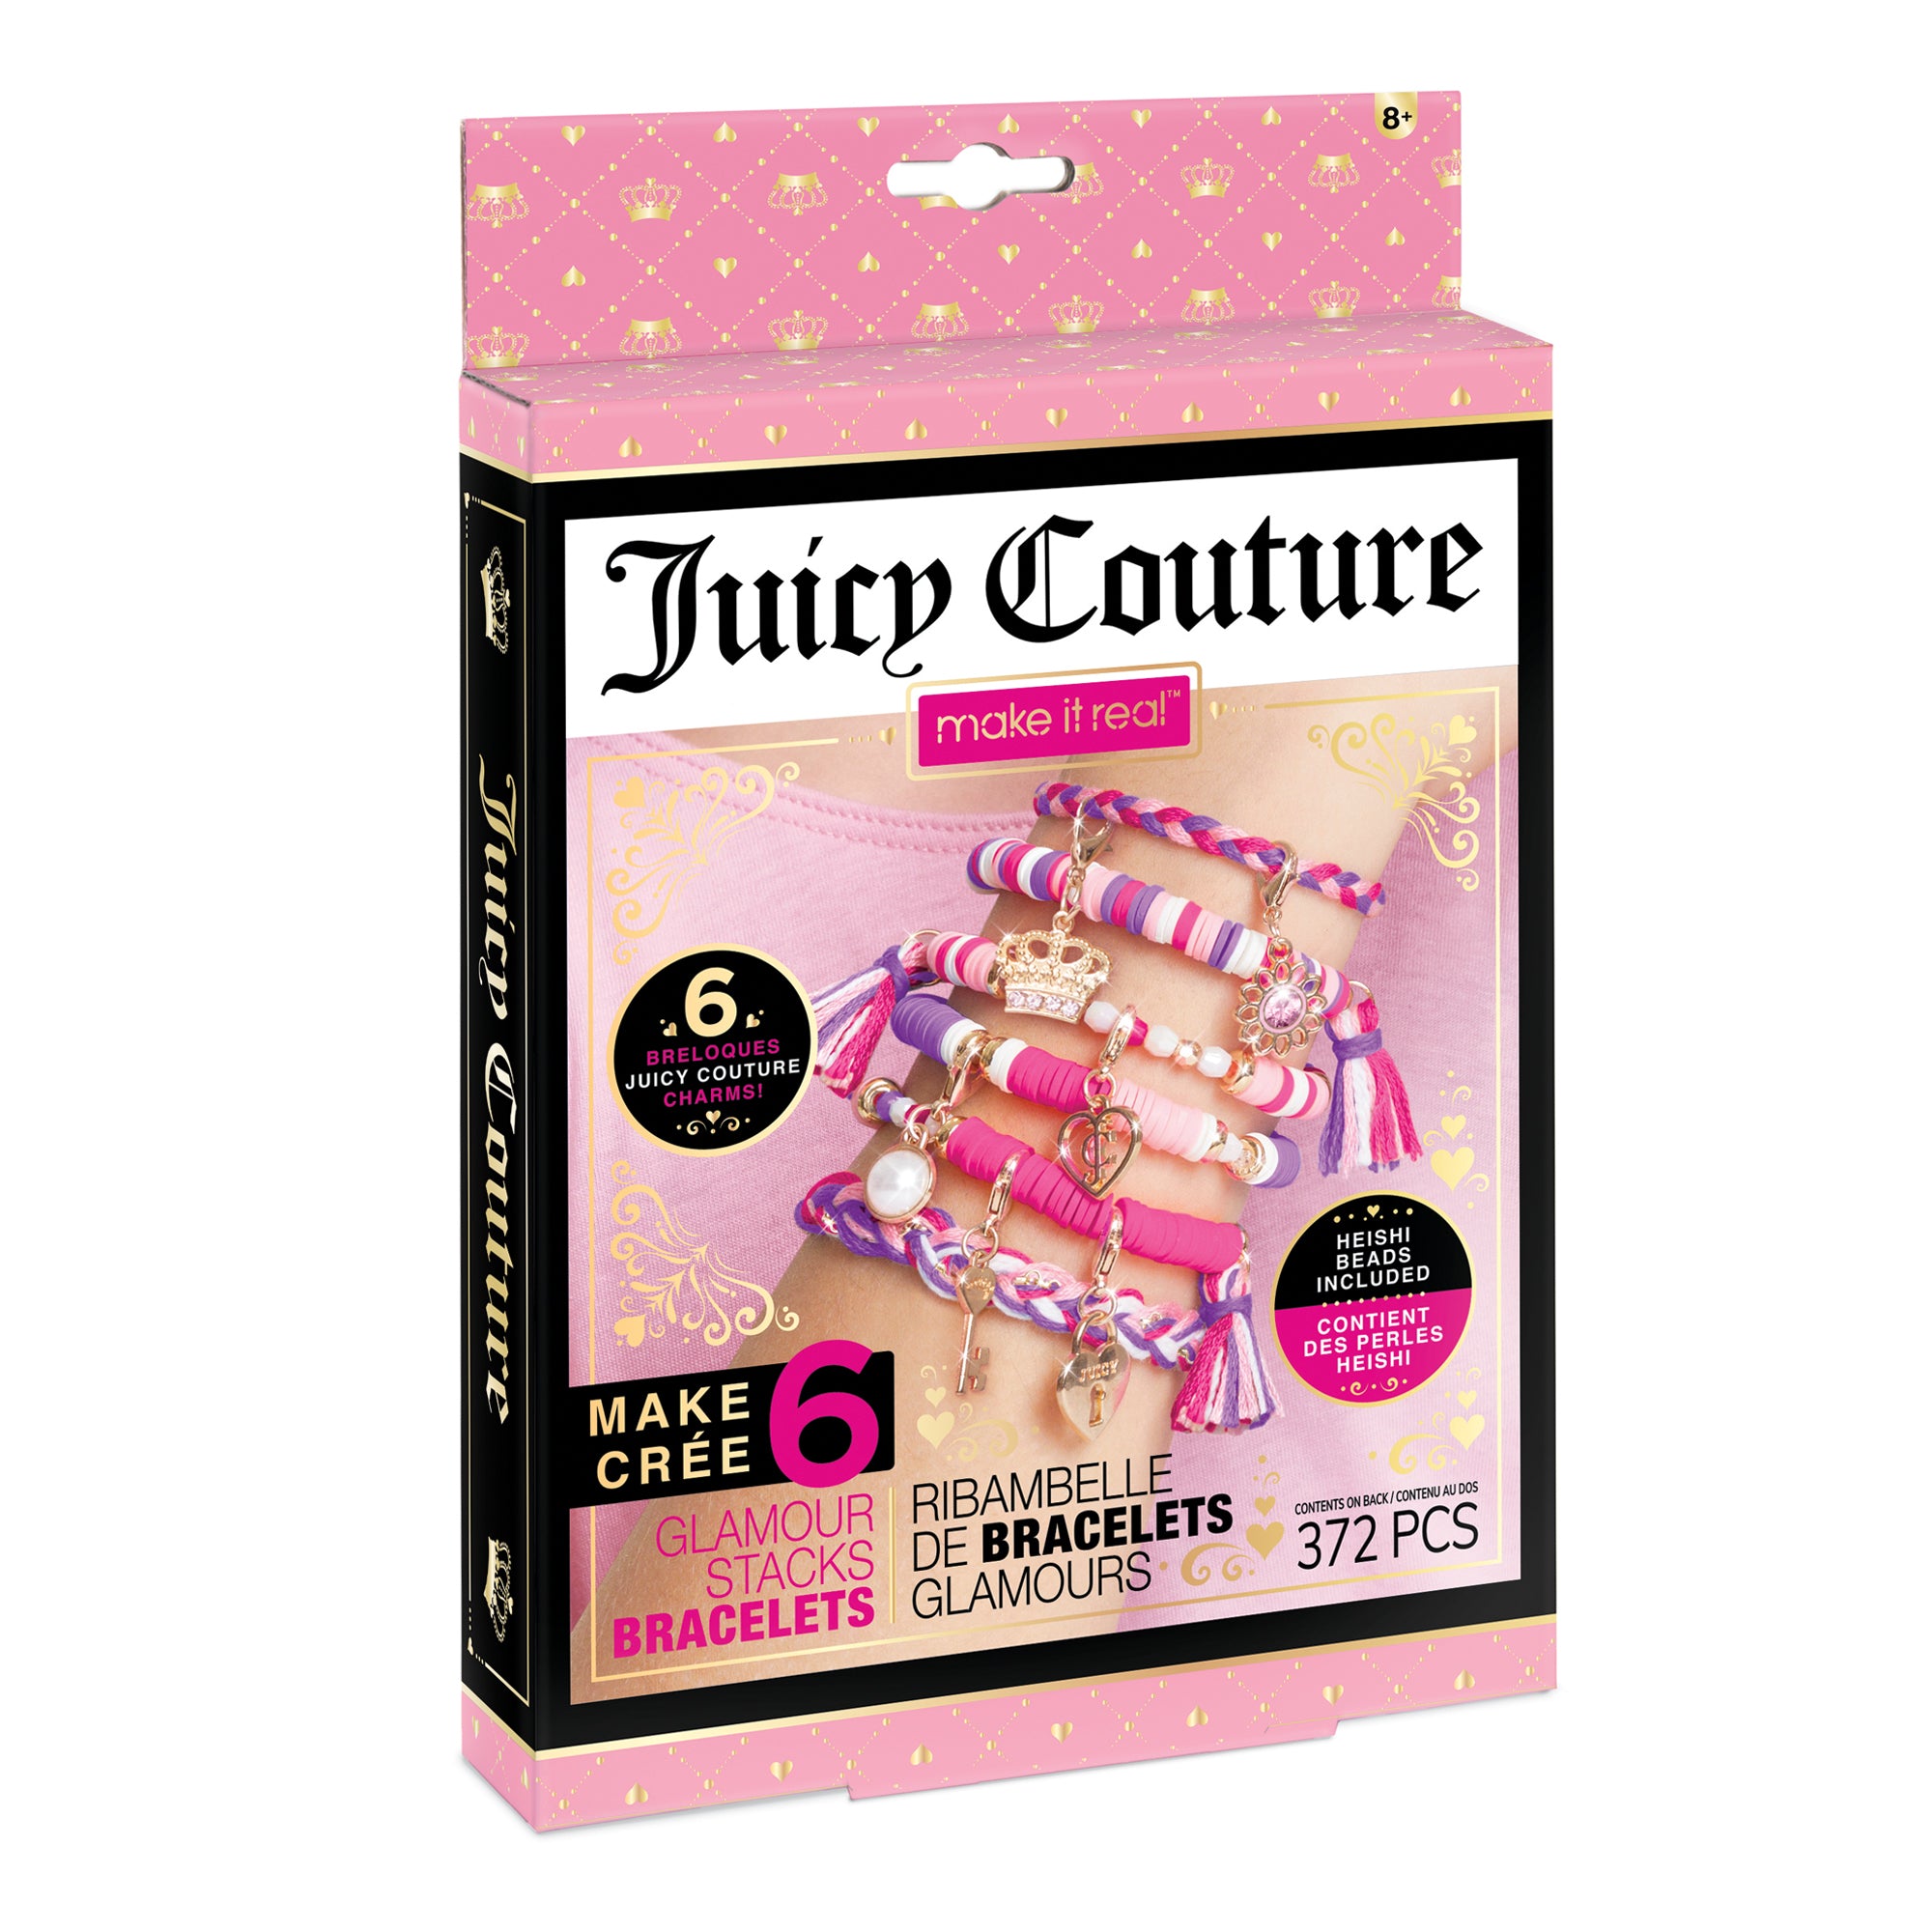 Juicy Couture 2-piece Logo Top & Pants Pajama Set in Black